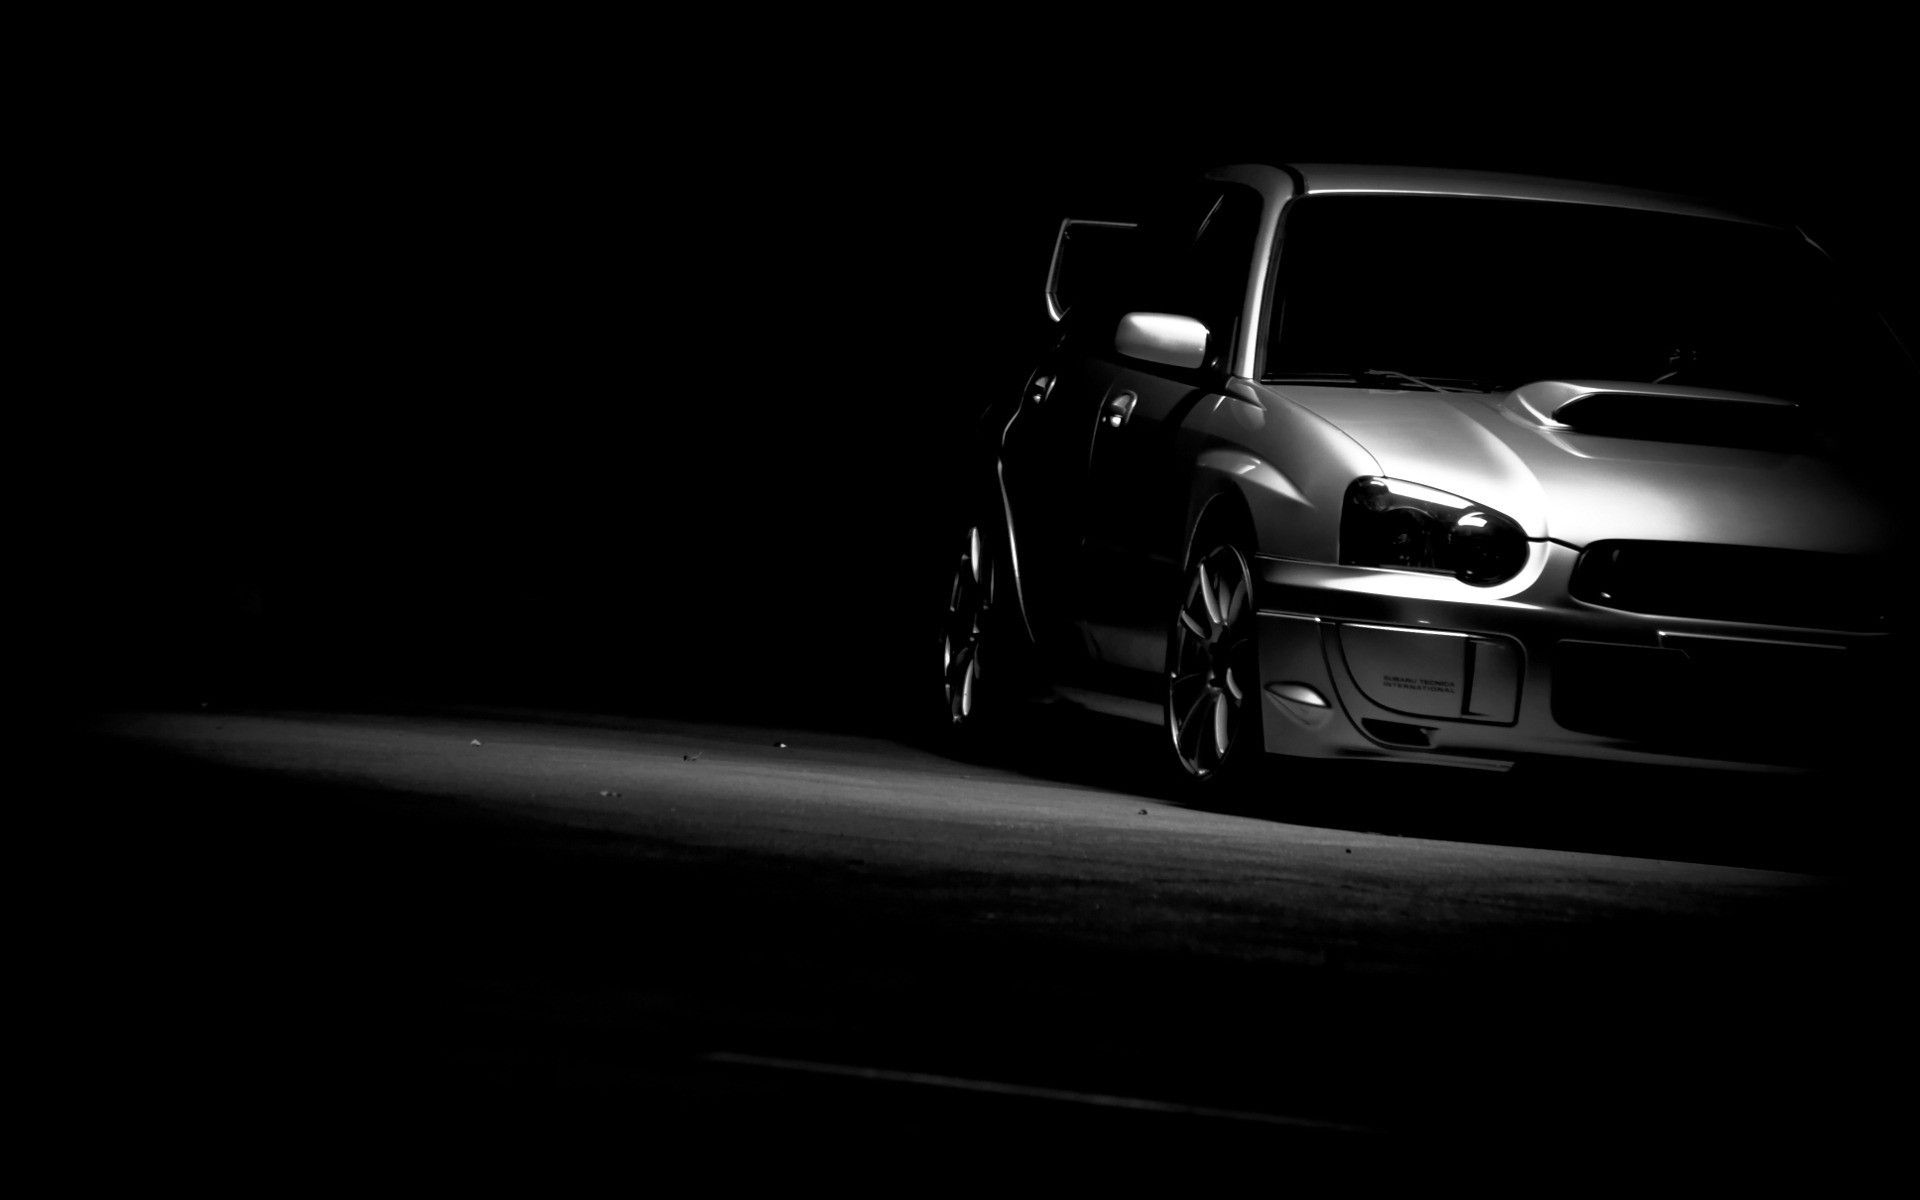 Subaru Impreza Wrx STI Images For PC Download 16546 Full HD ...